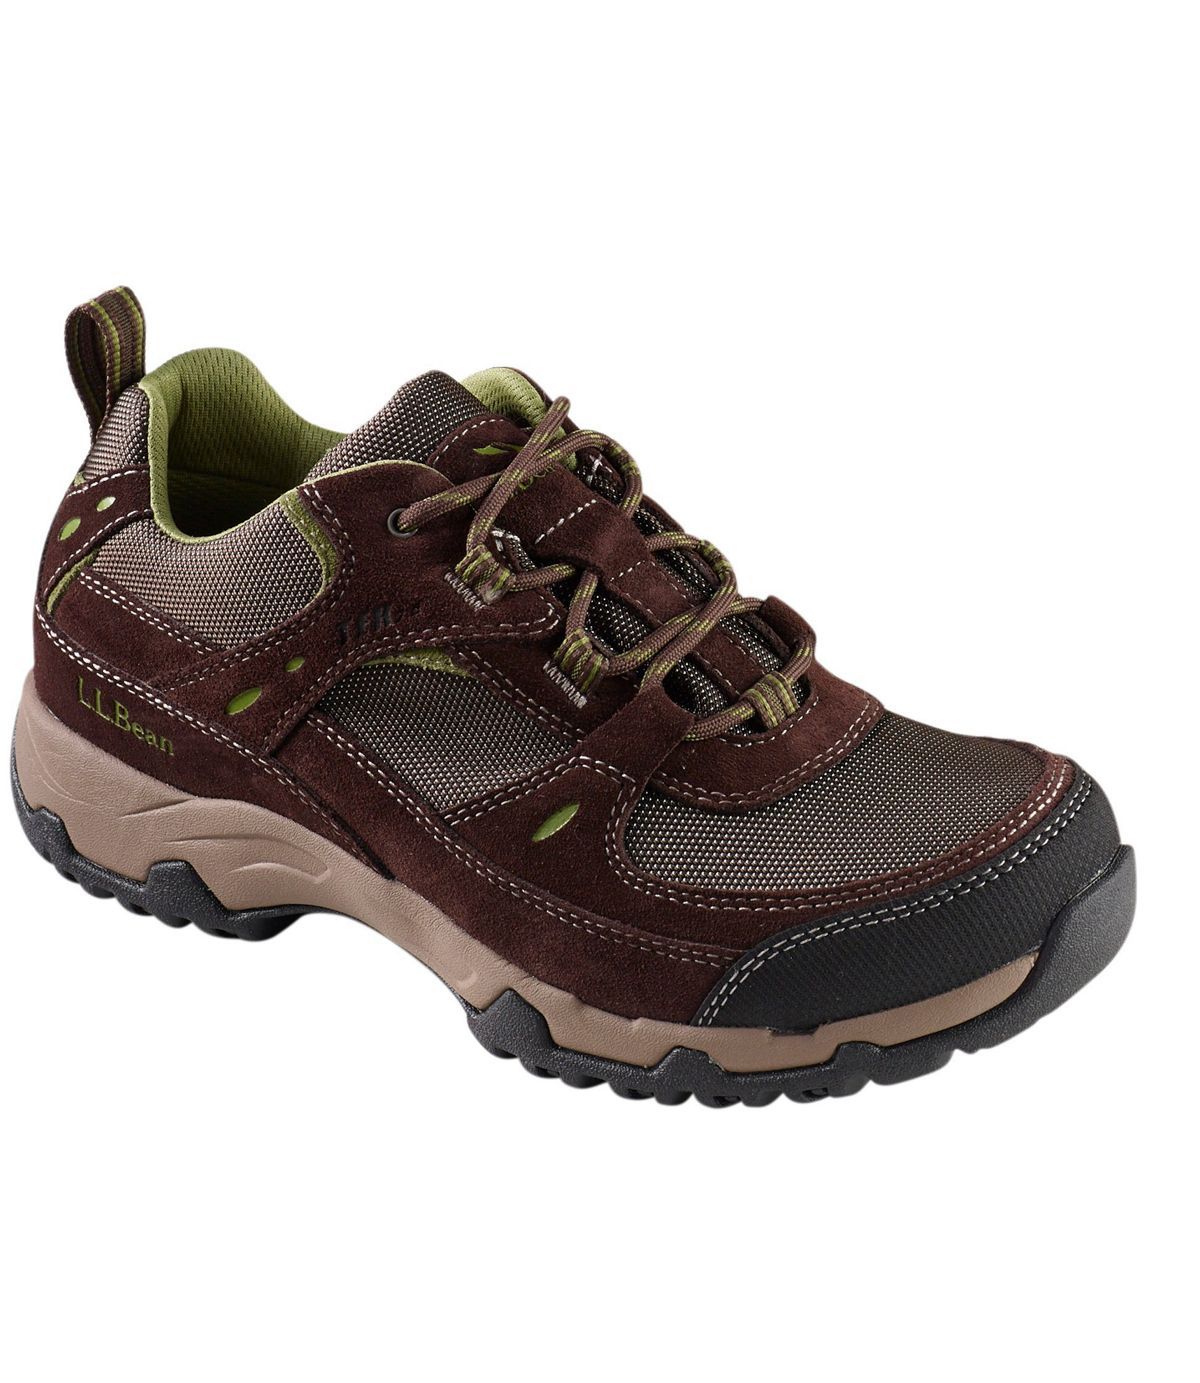 Trail Model 4 Waterproof Hiking Shoes